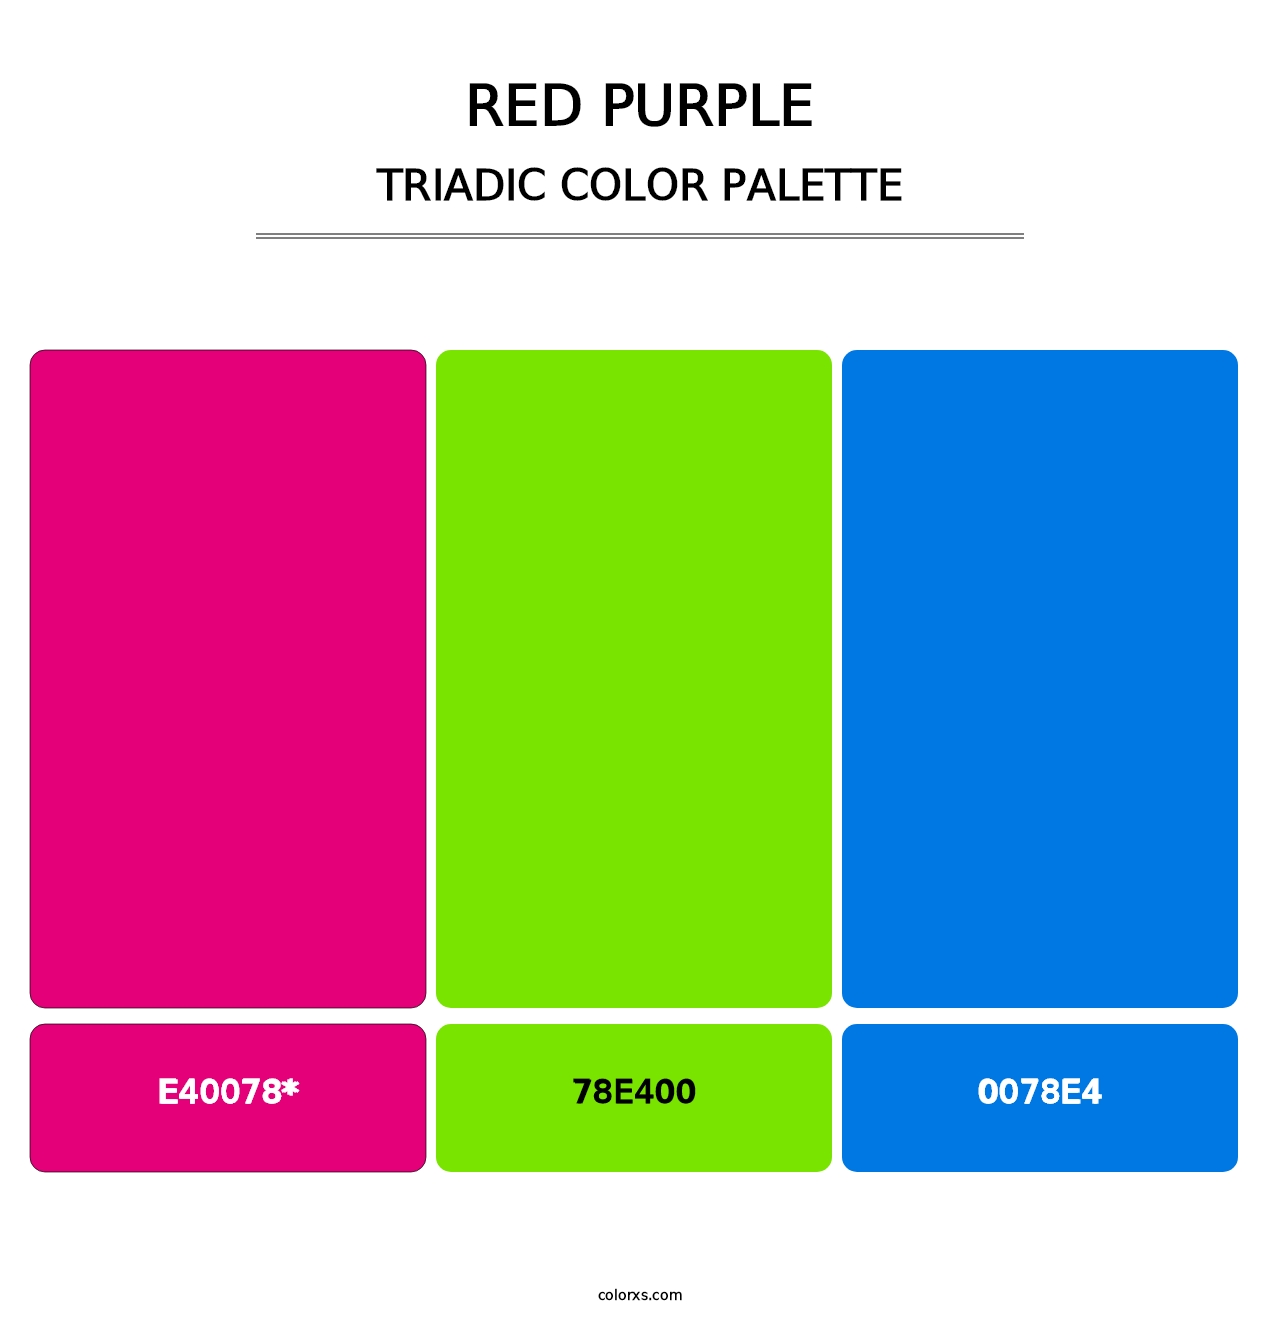 Red Purple - Triadic Color Palette